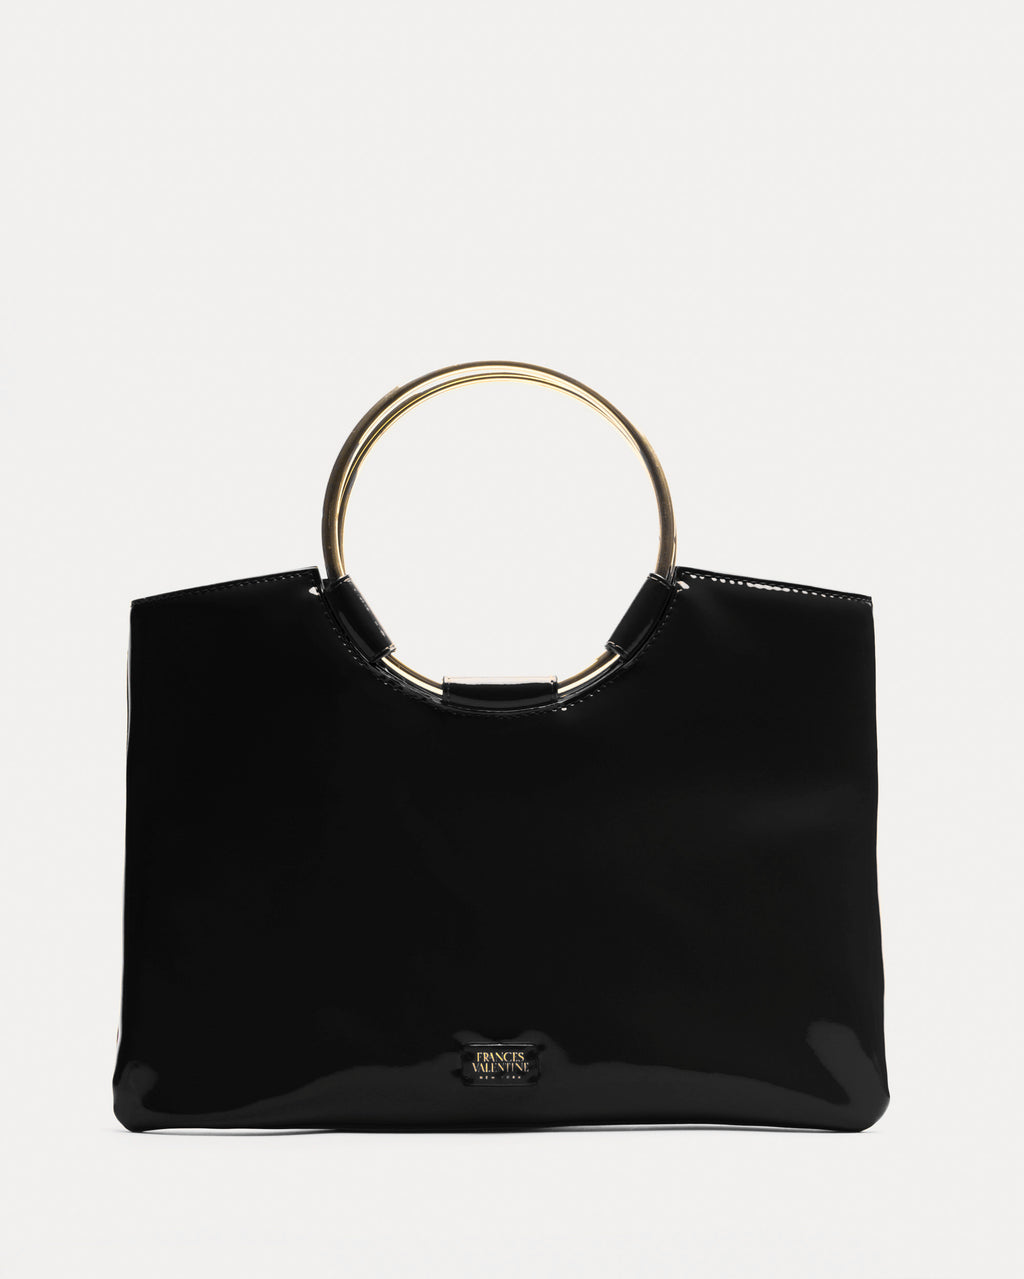 Frances Valentine Ringo Bag Soft Patent Black, One Size